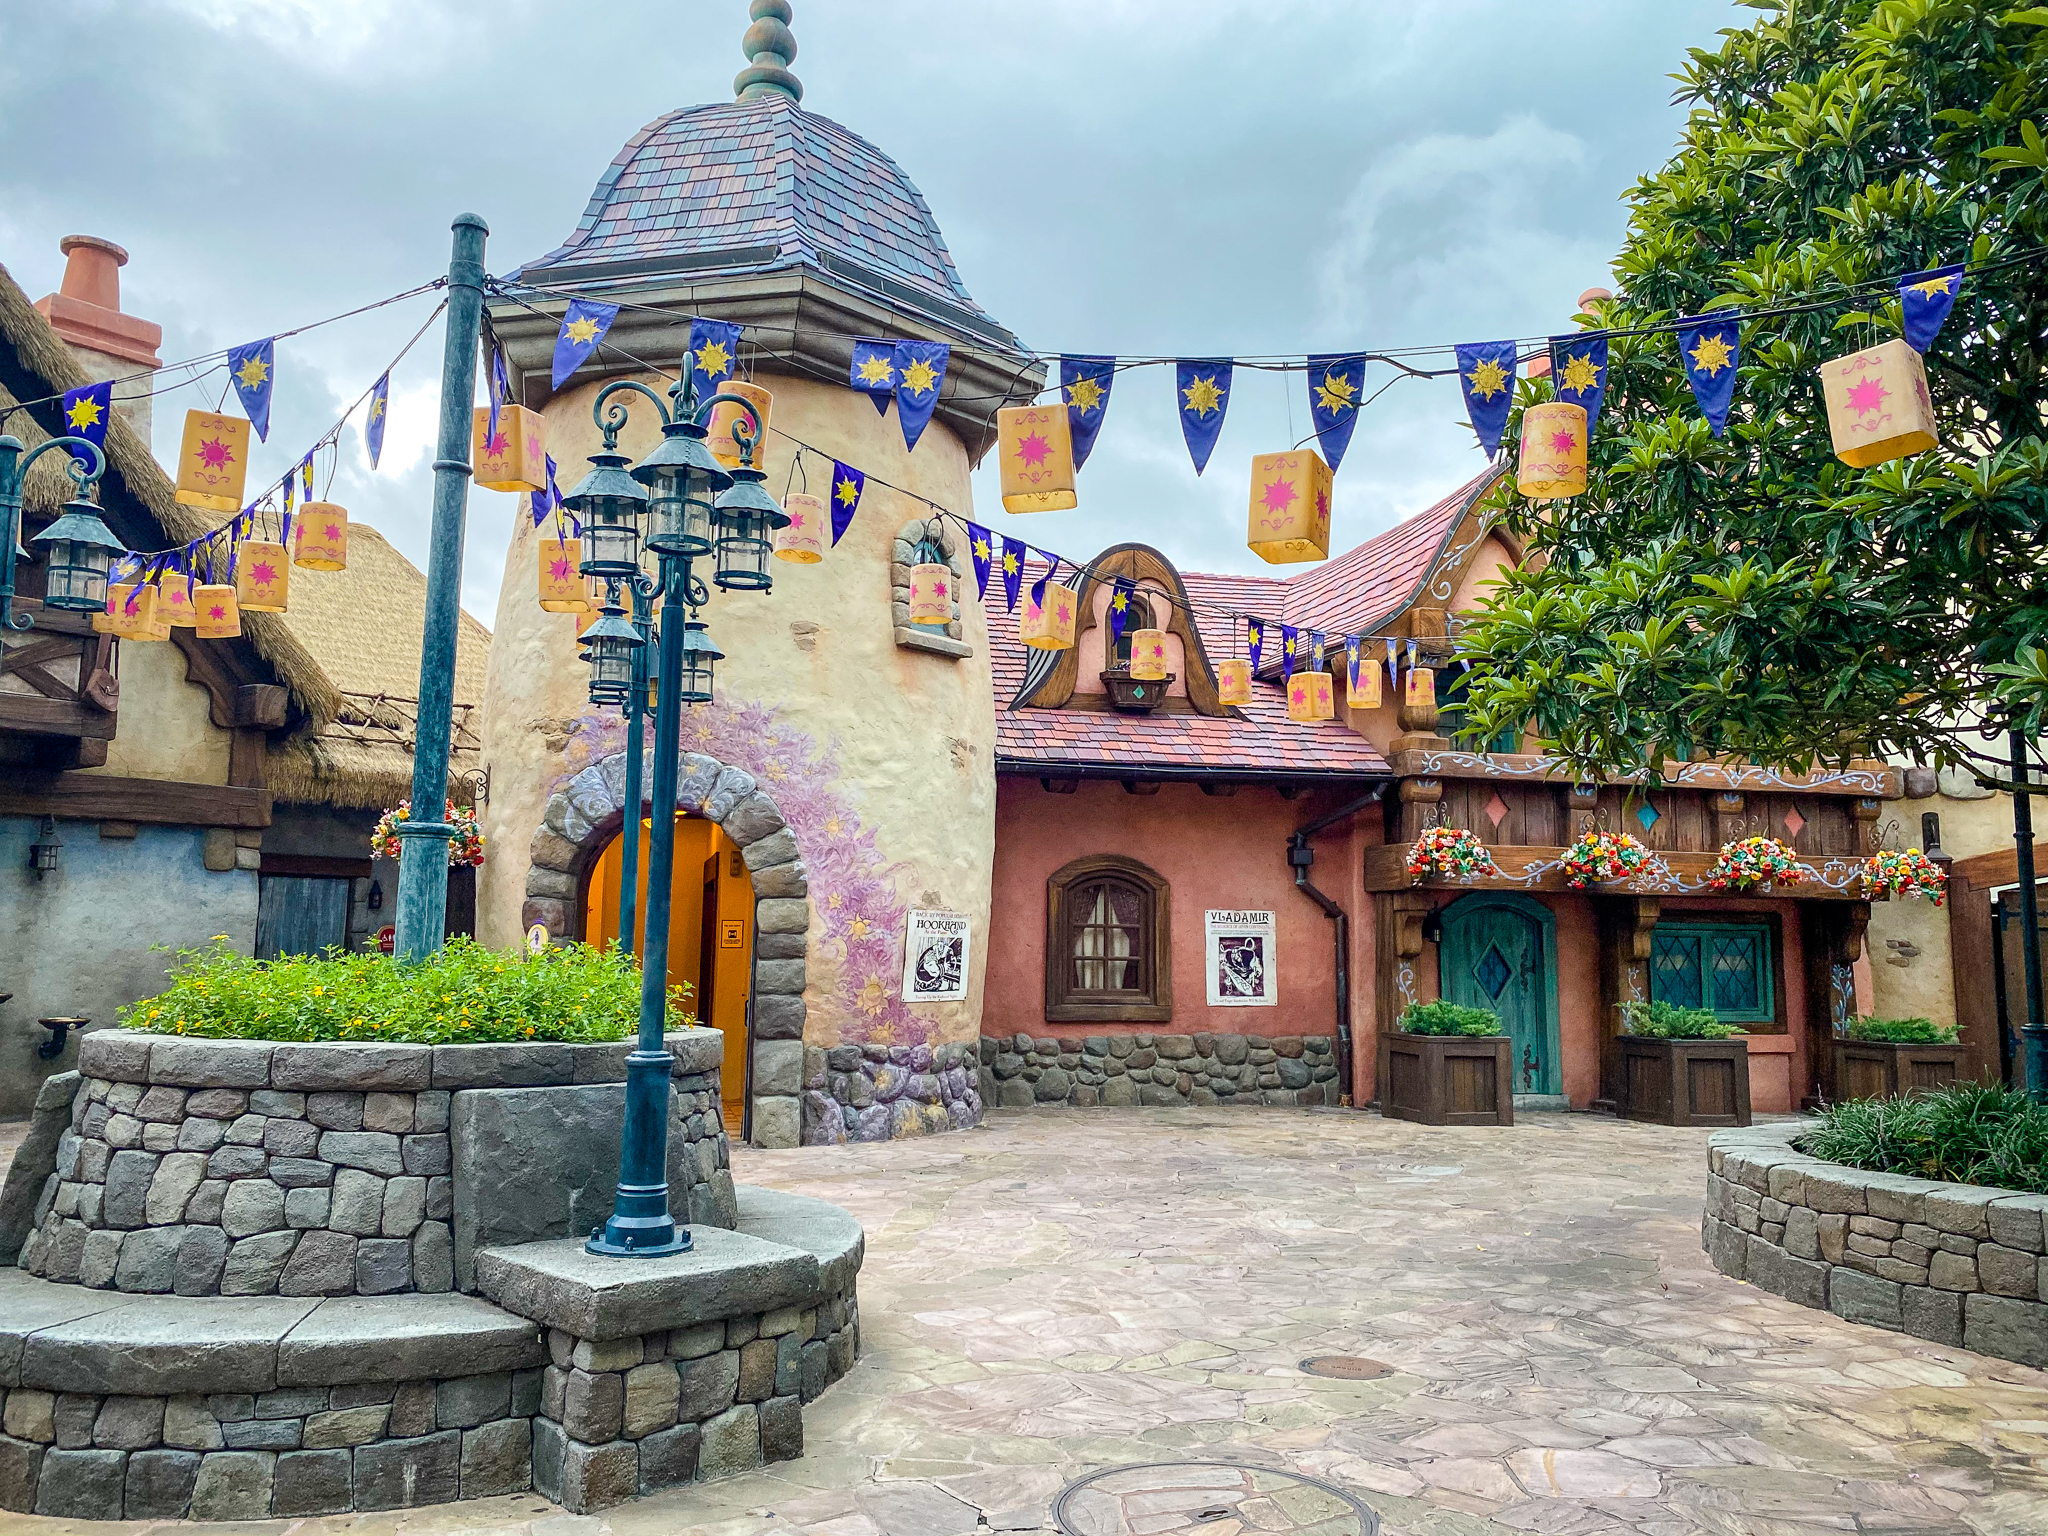 Tangled Toilets in Fantasyland of Magic Kingdom